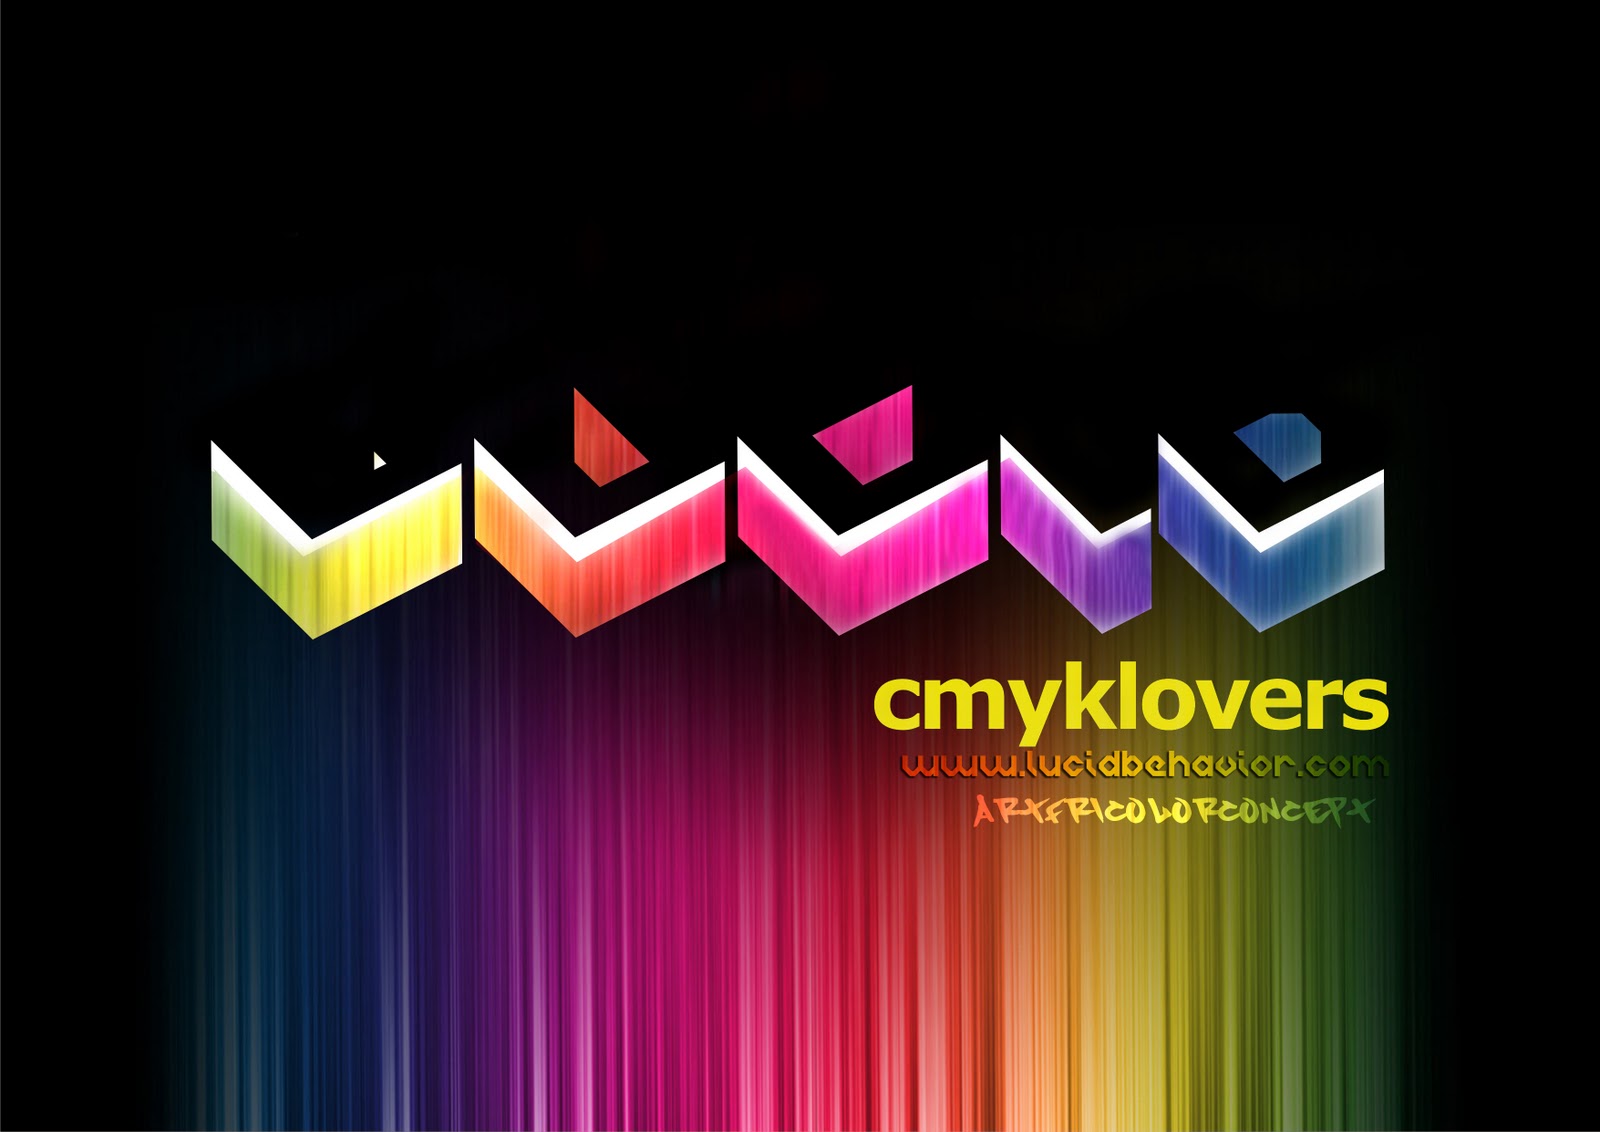 LUCID CMYK LOVERS concept 2010, Lucid Cloth.